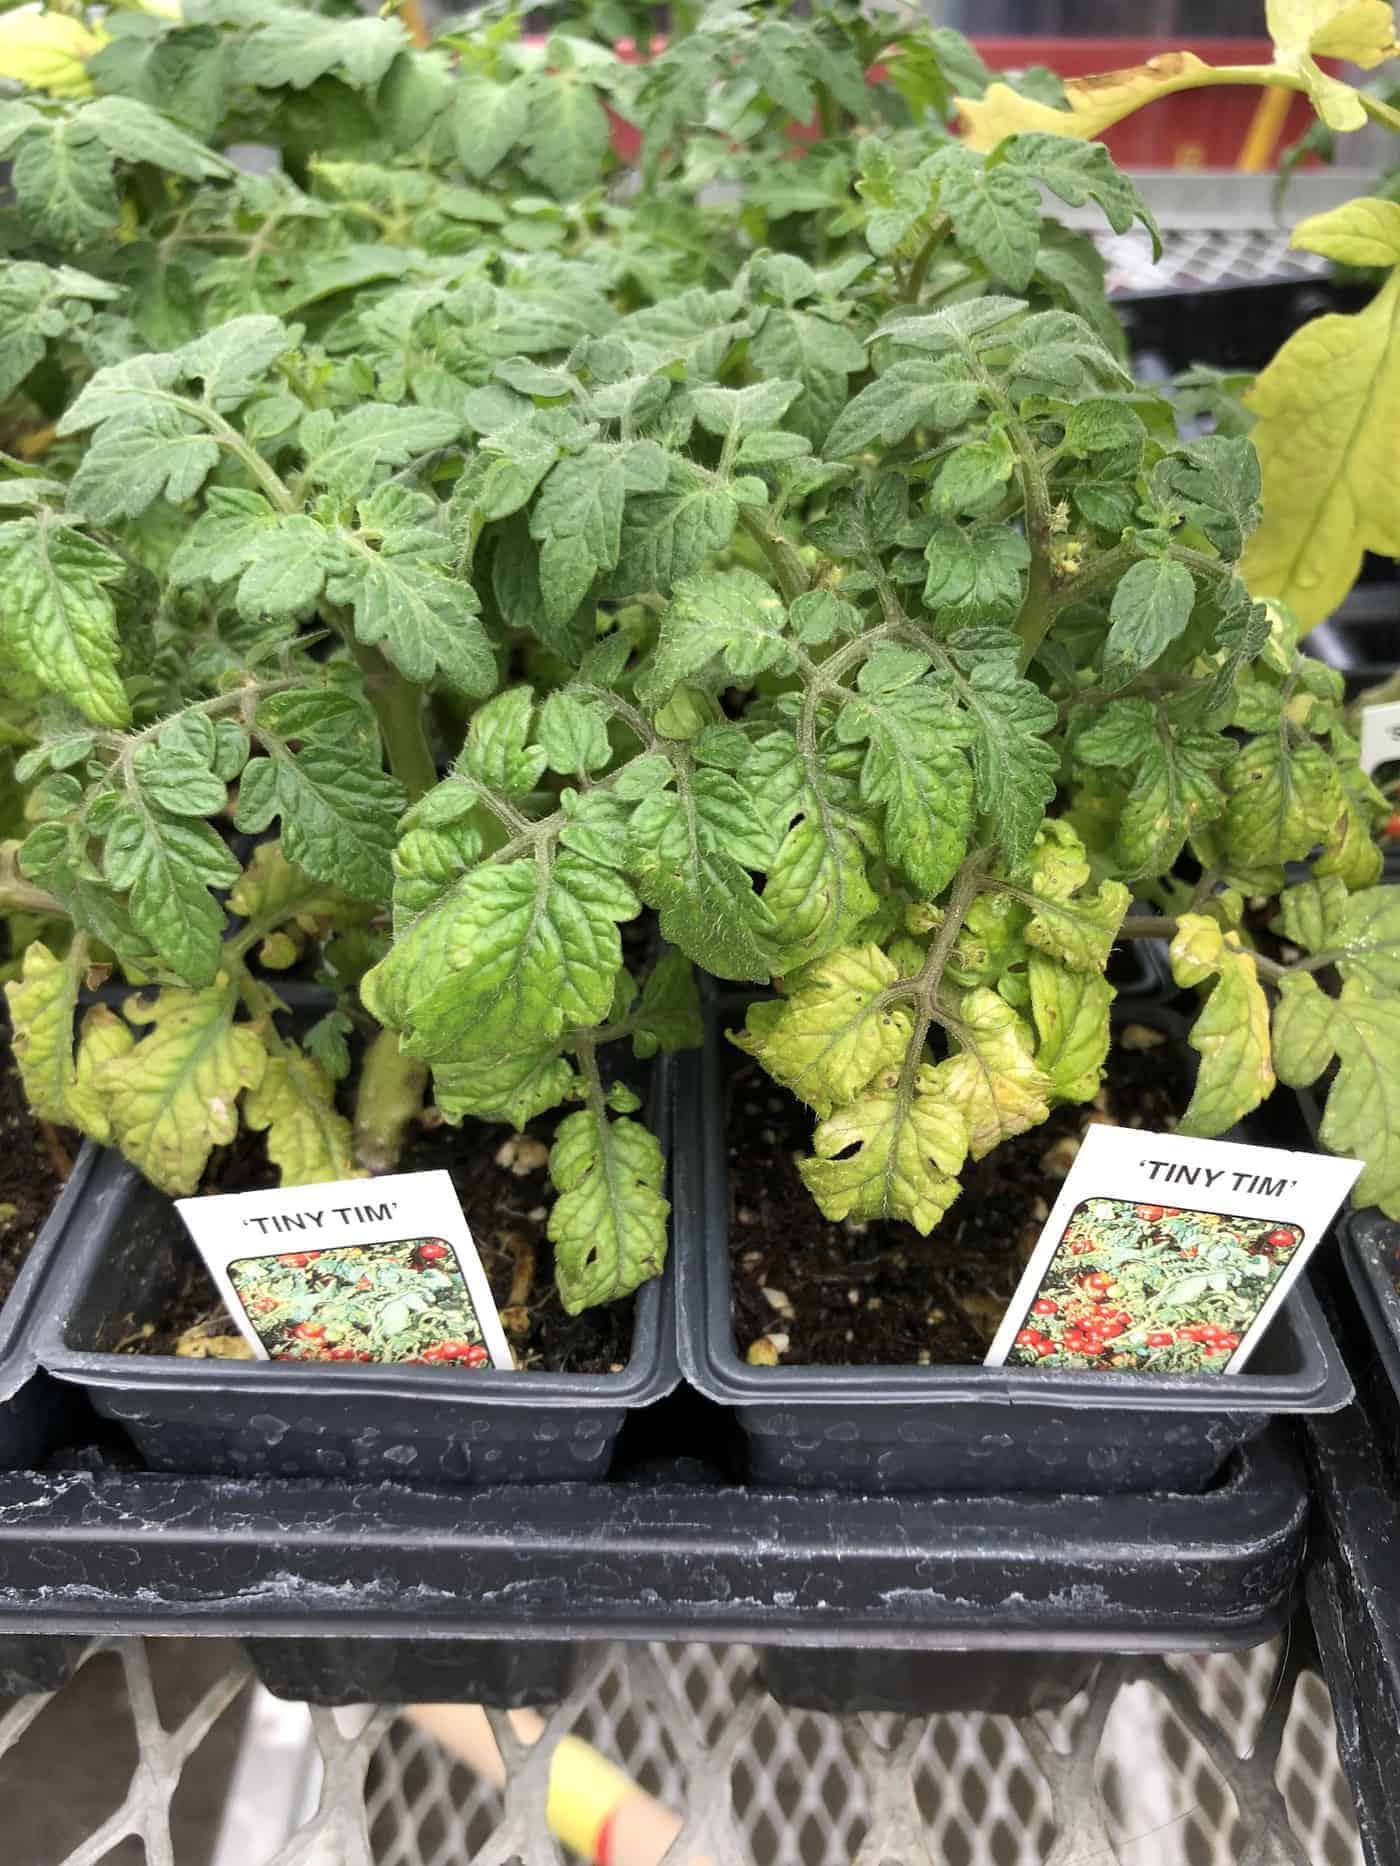 Tiny tim tomato seedlings